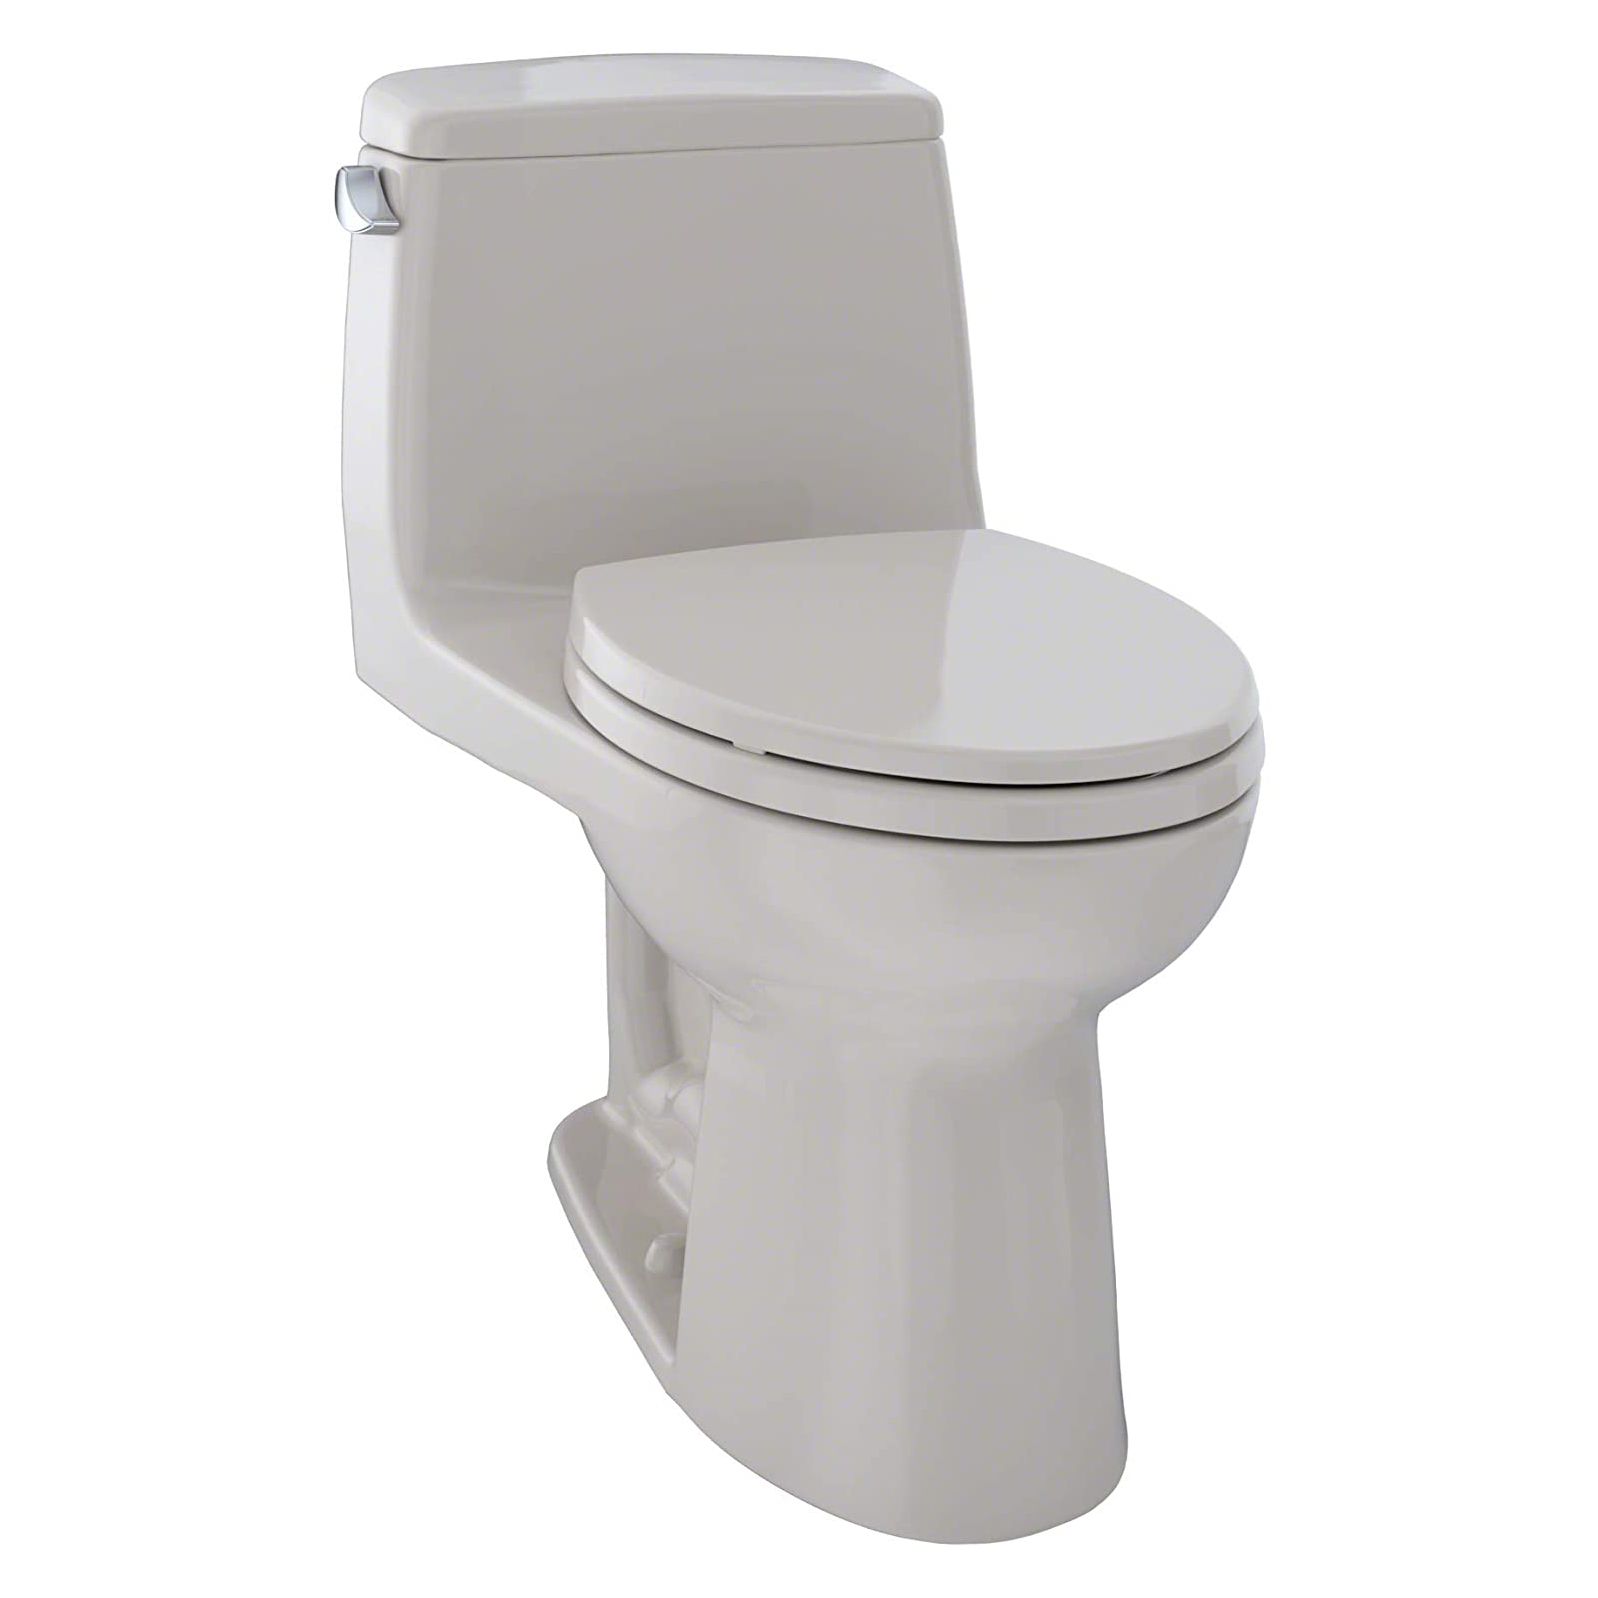 Ultramax 1-pc Elongated Toilet w/Seat in Sedona Beige1.6 gpf